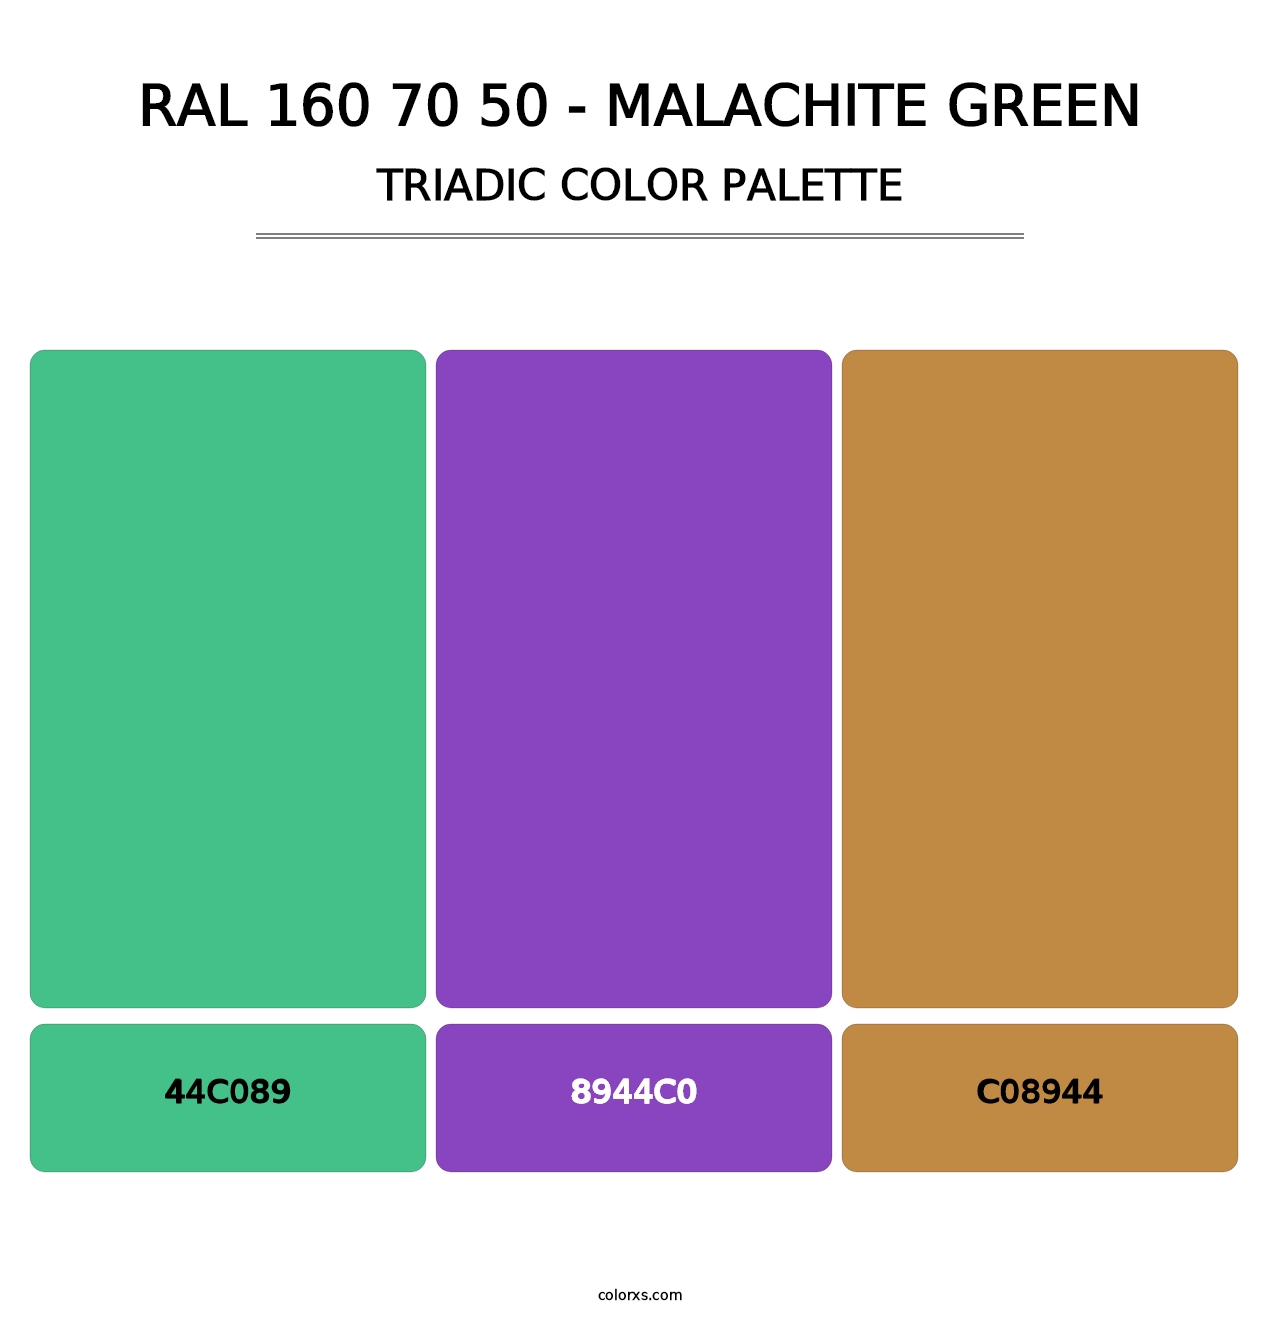 RAL 160 70 50 - Malachite Green - Triadic Color Palette